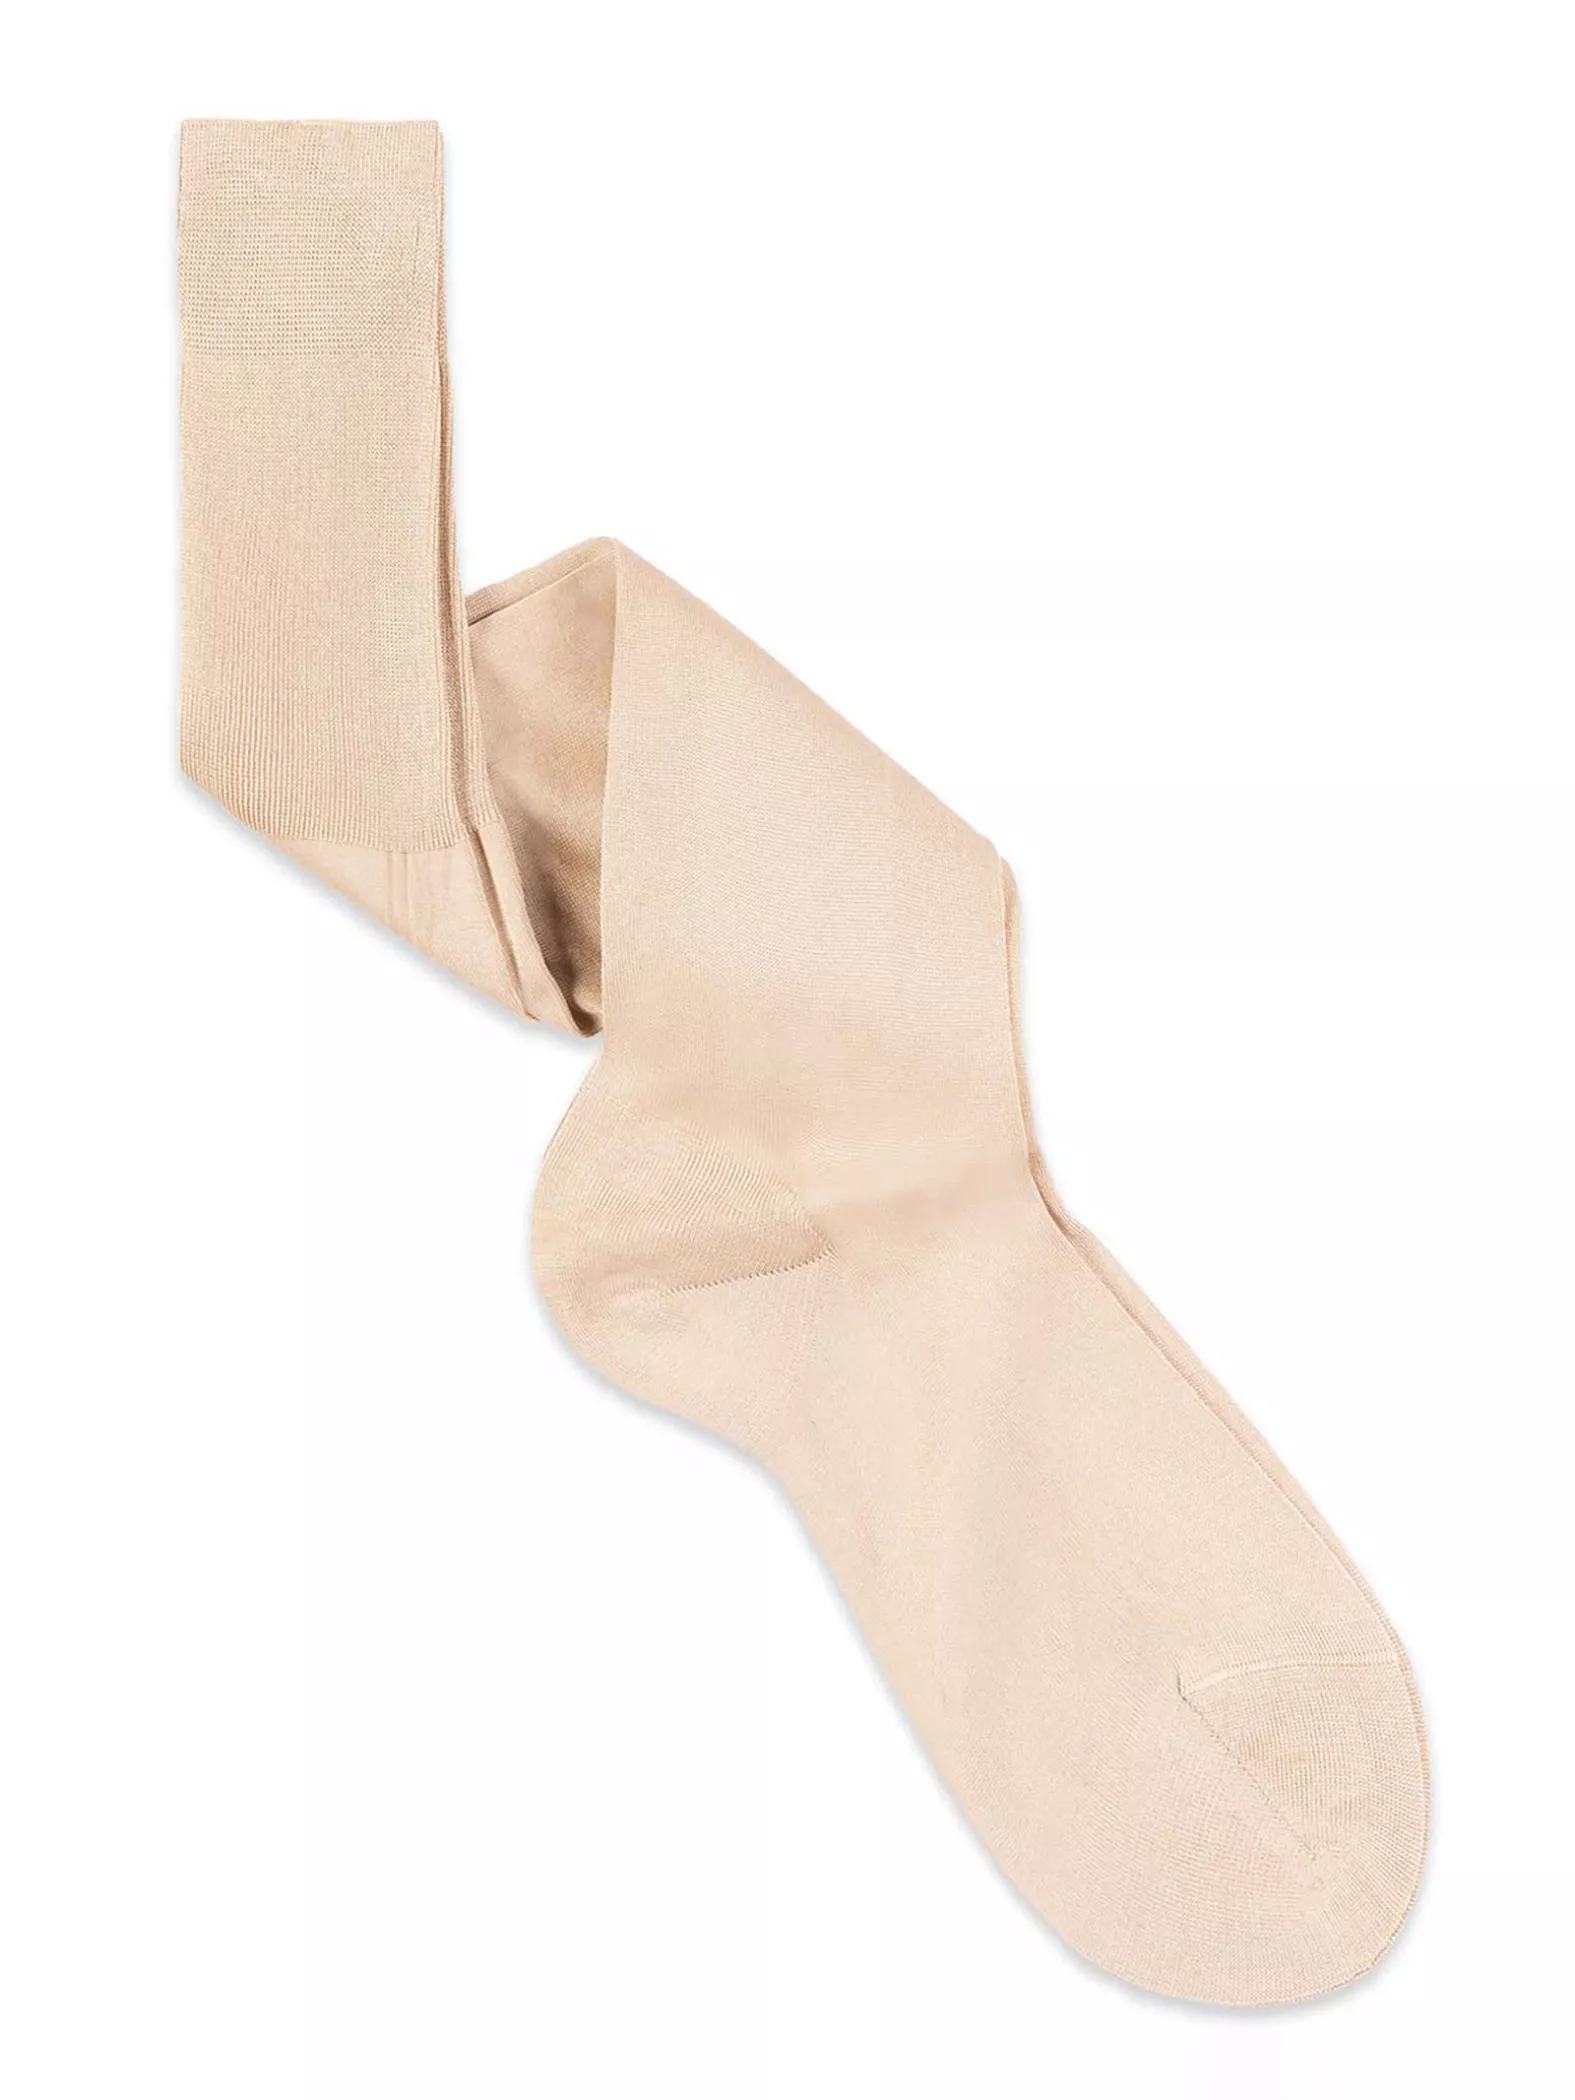 Plain knee high socks - 100% Filo scozia cotton